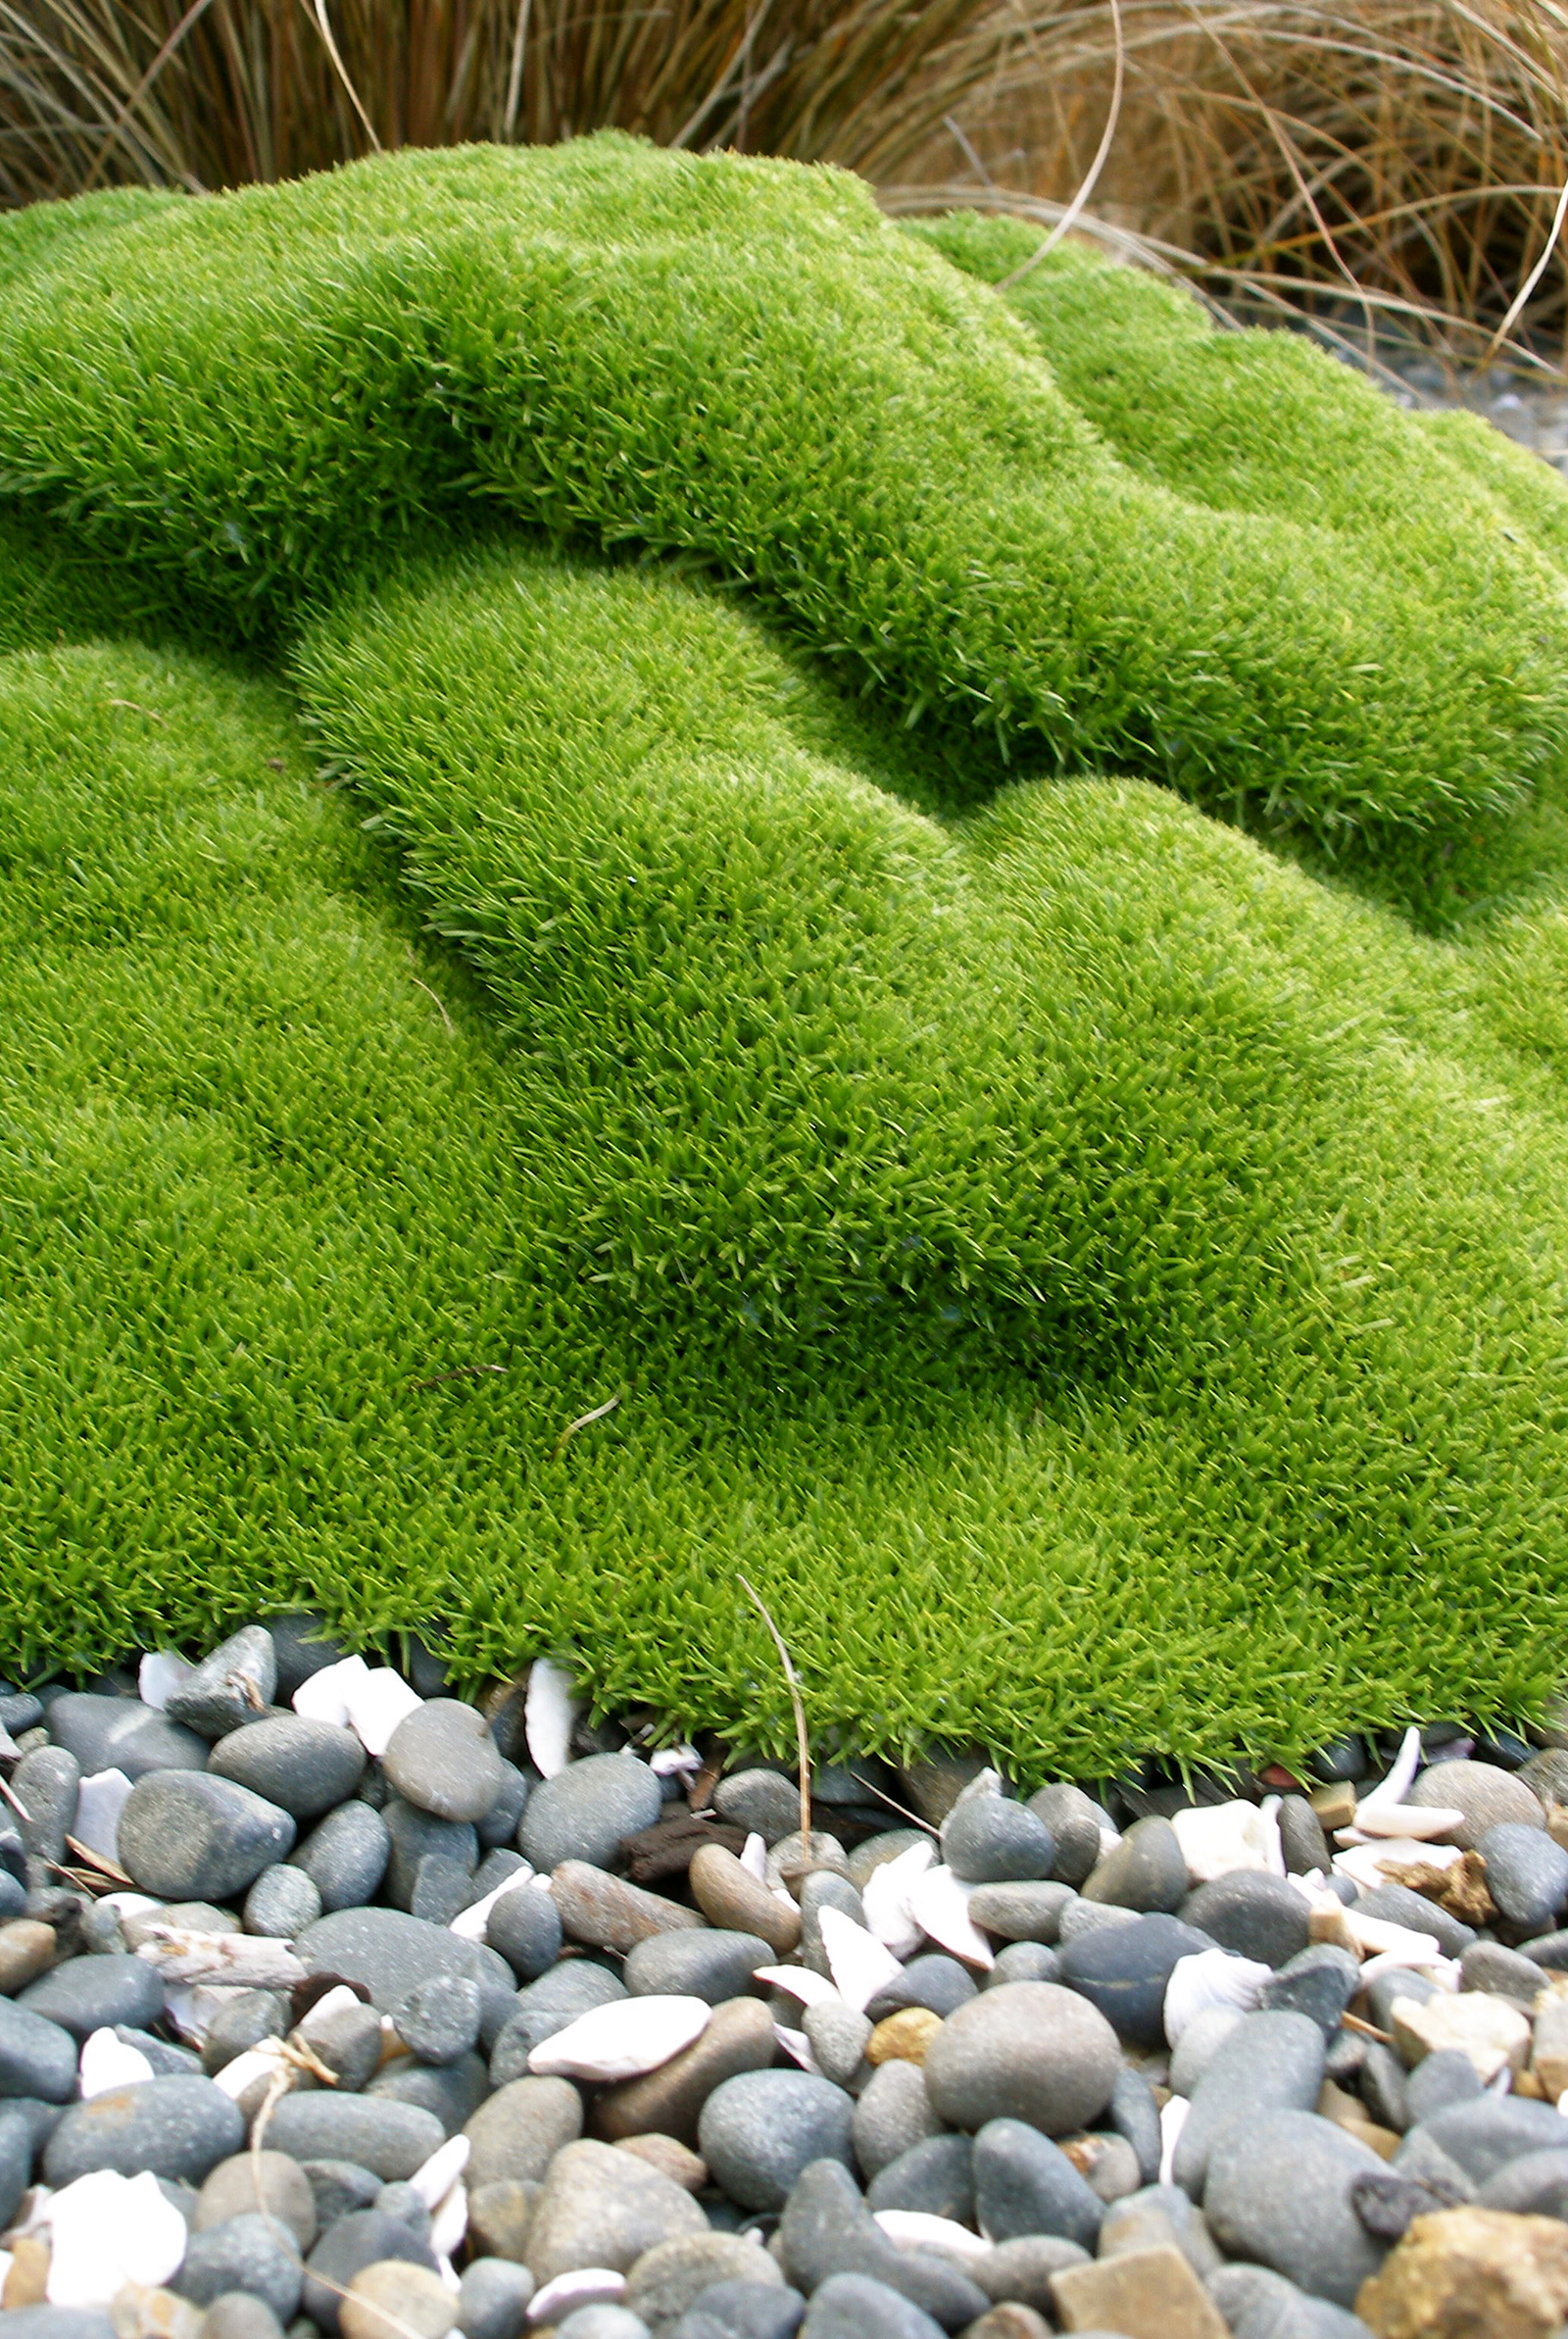 scleranthus moss, grasses and pebble garden